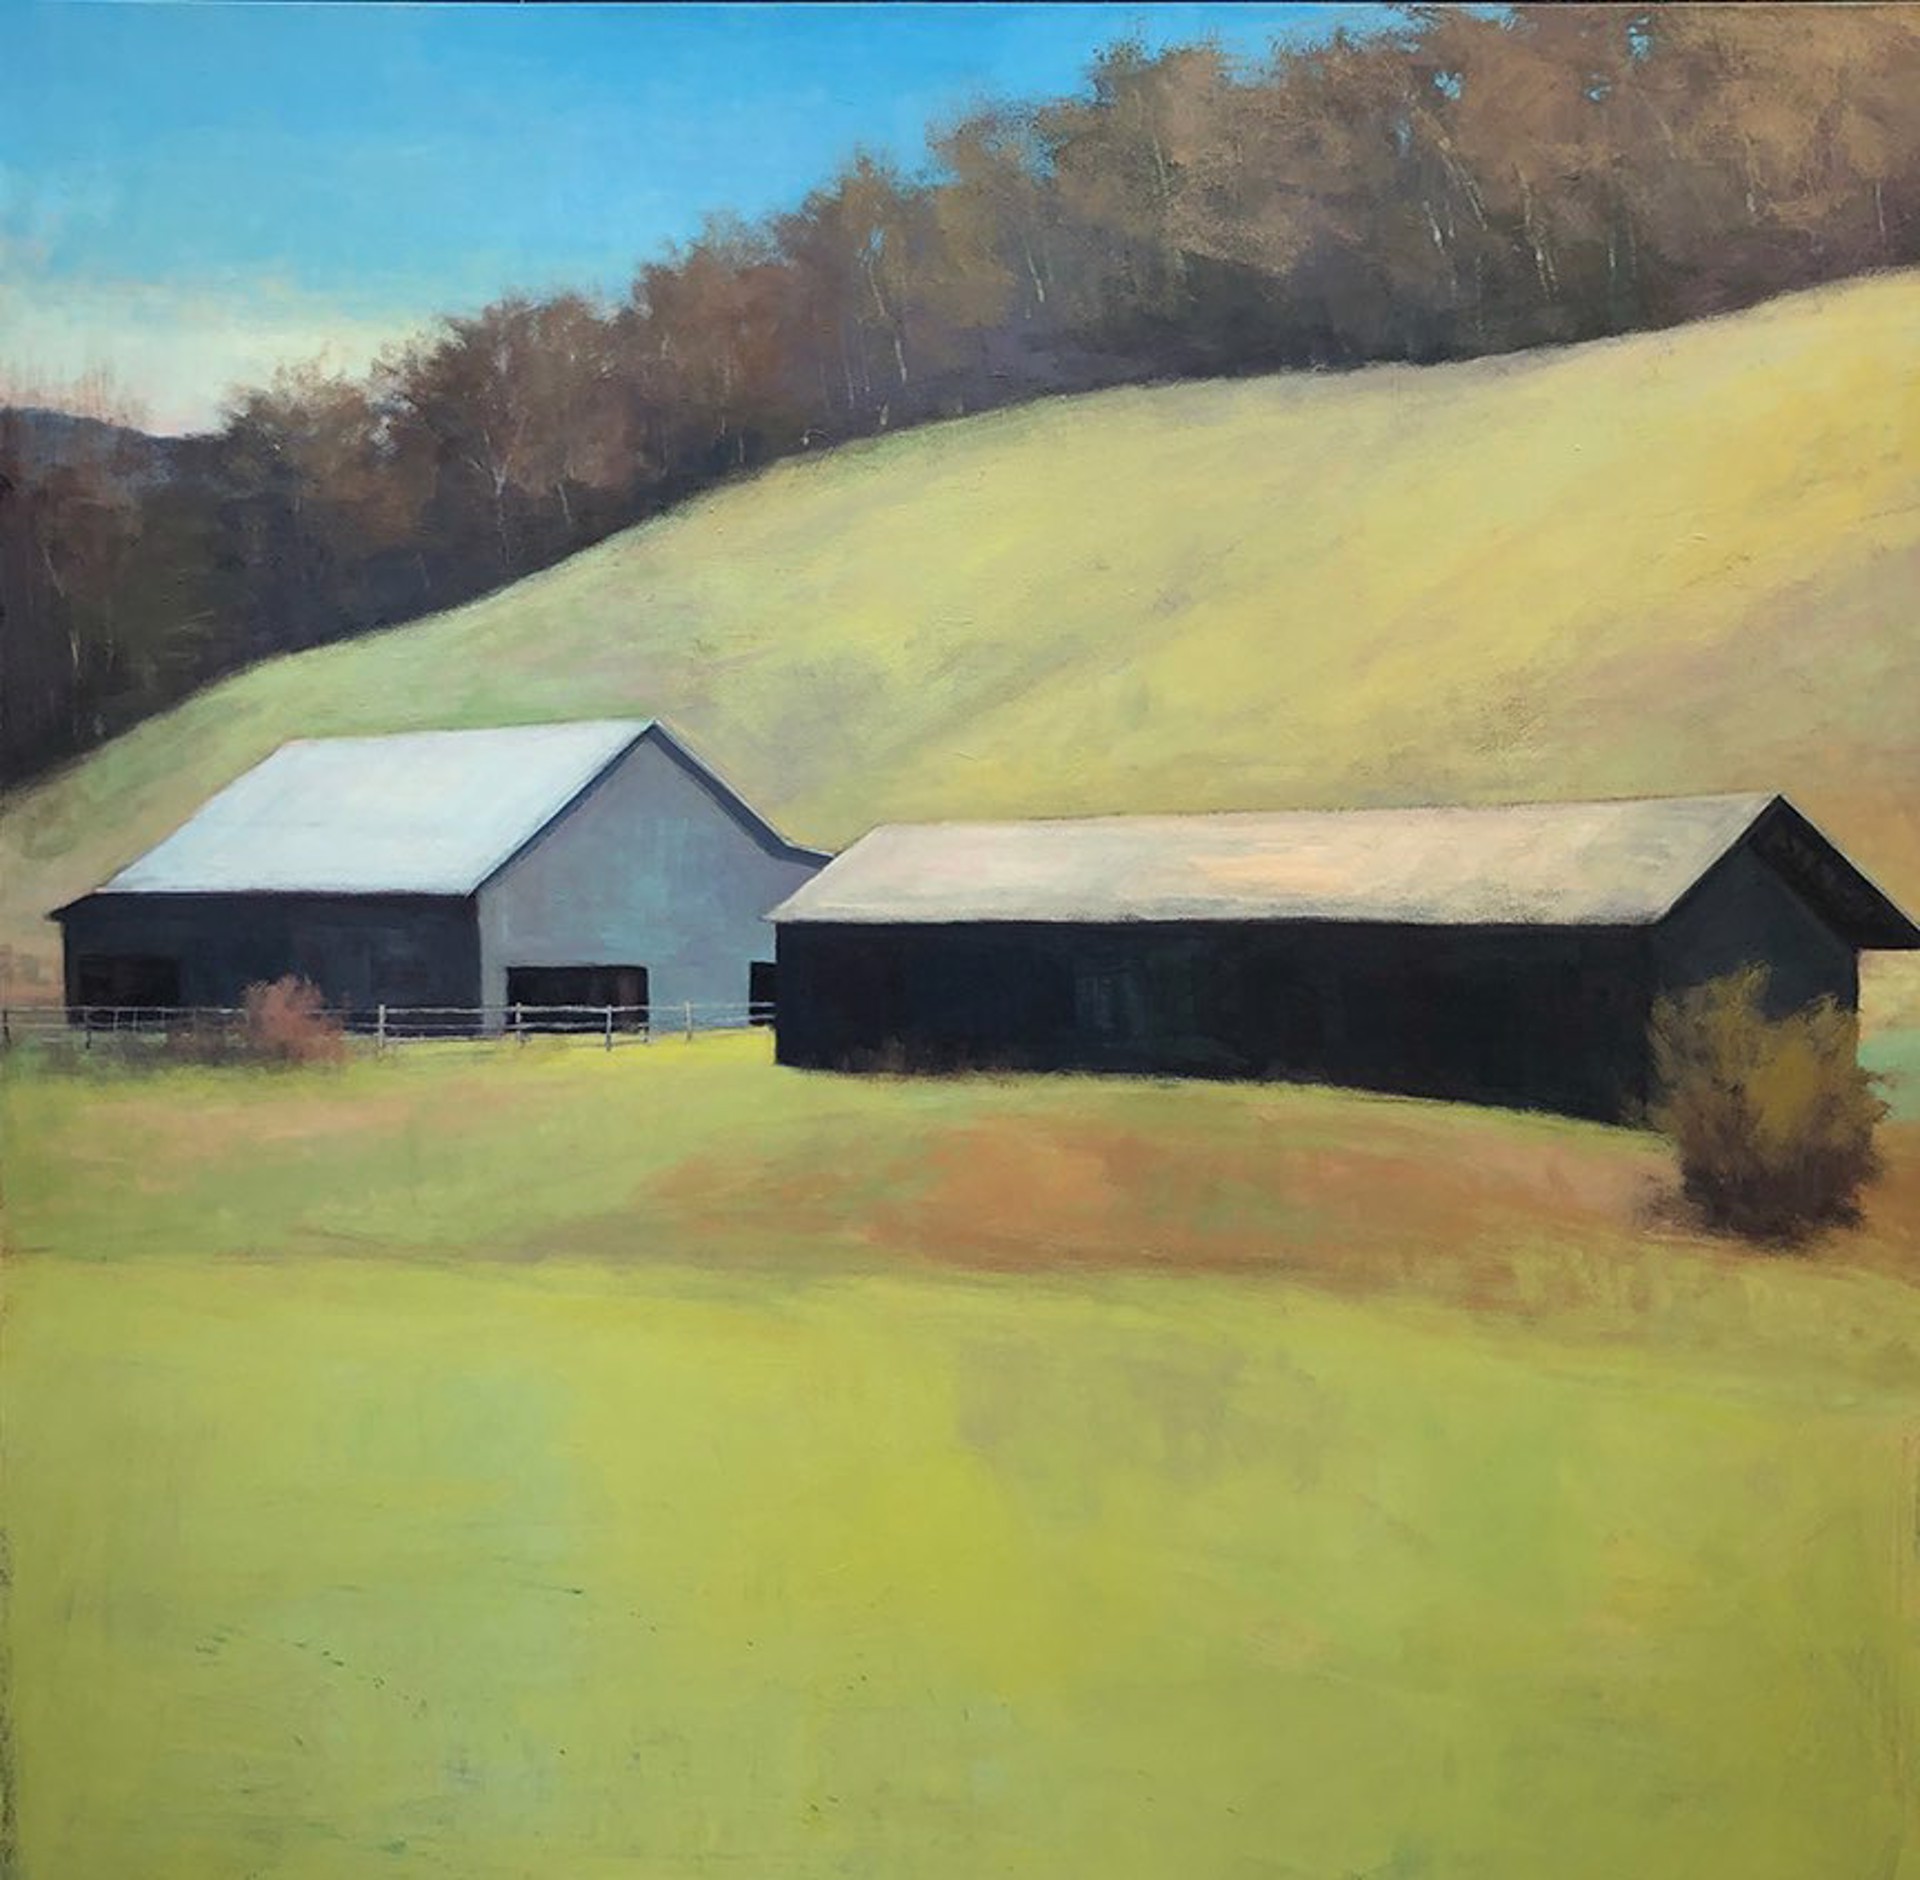 Carolina Barns by David Skinner